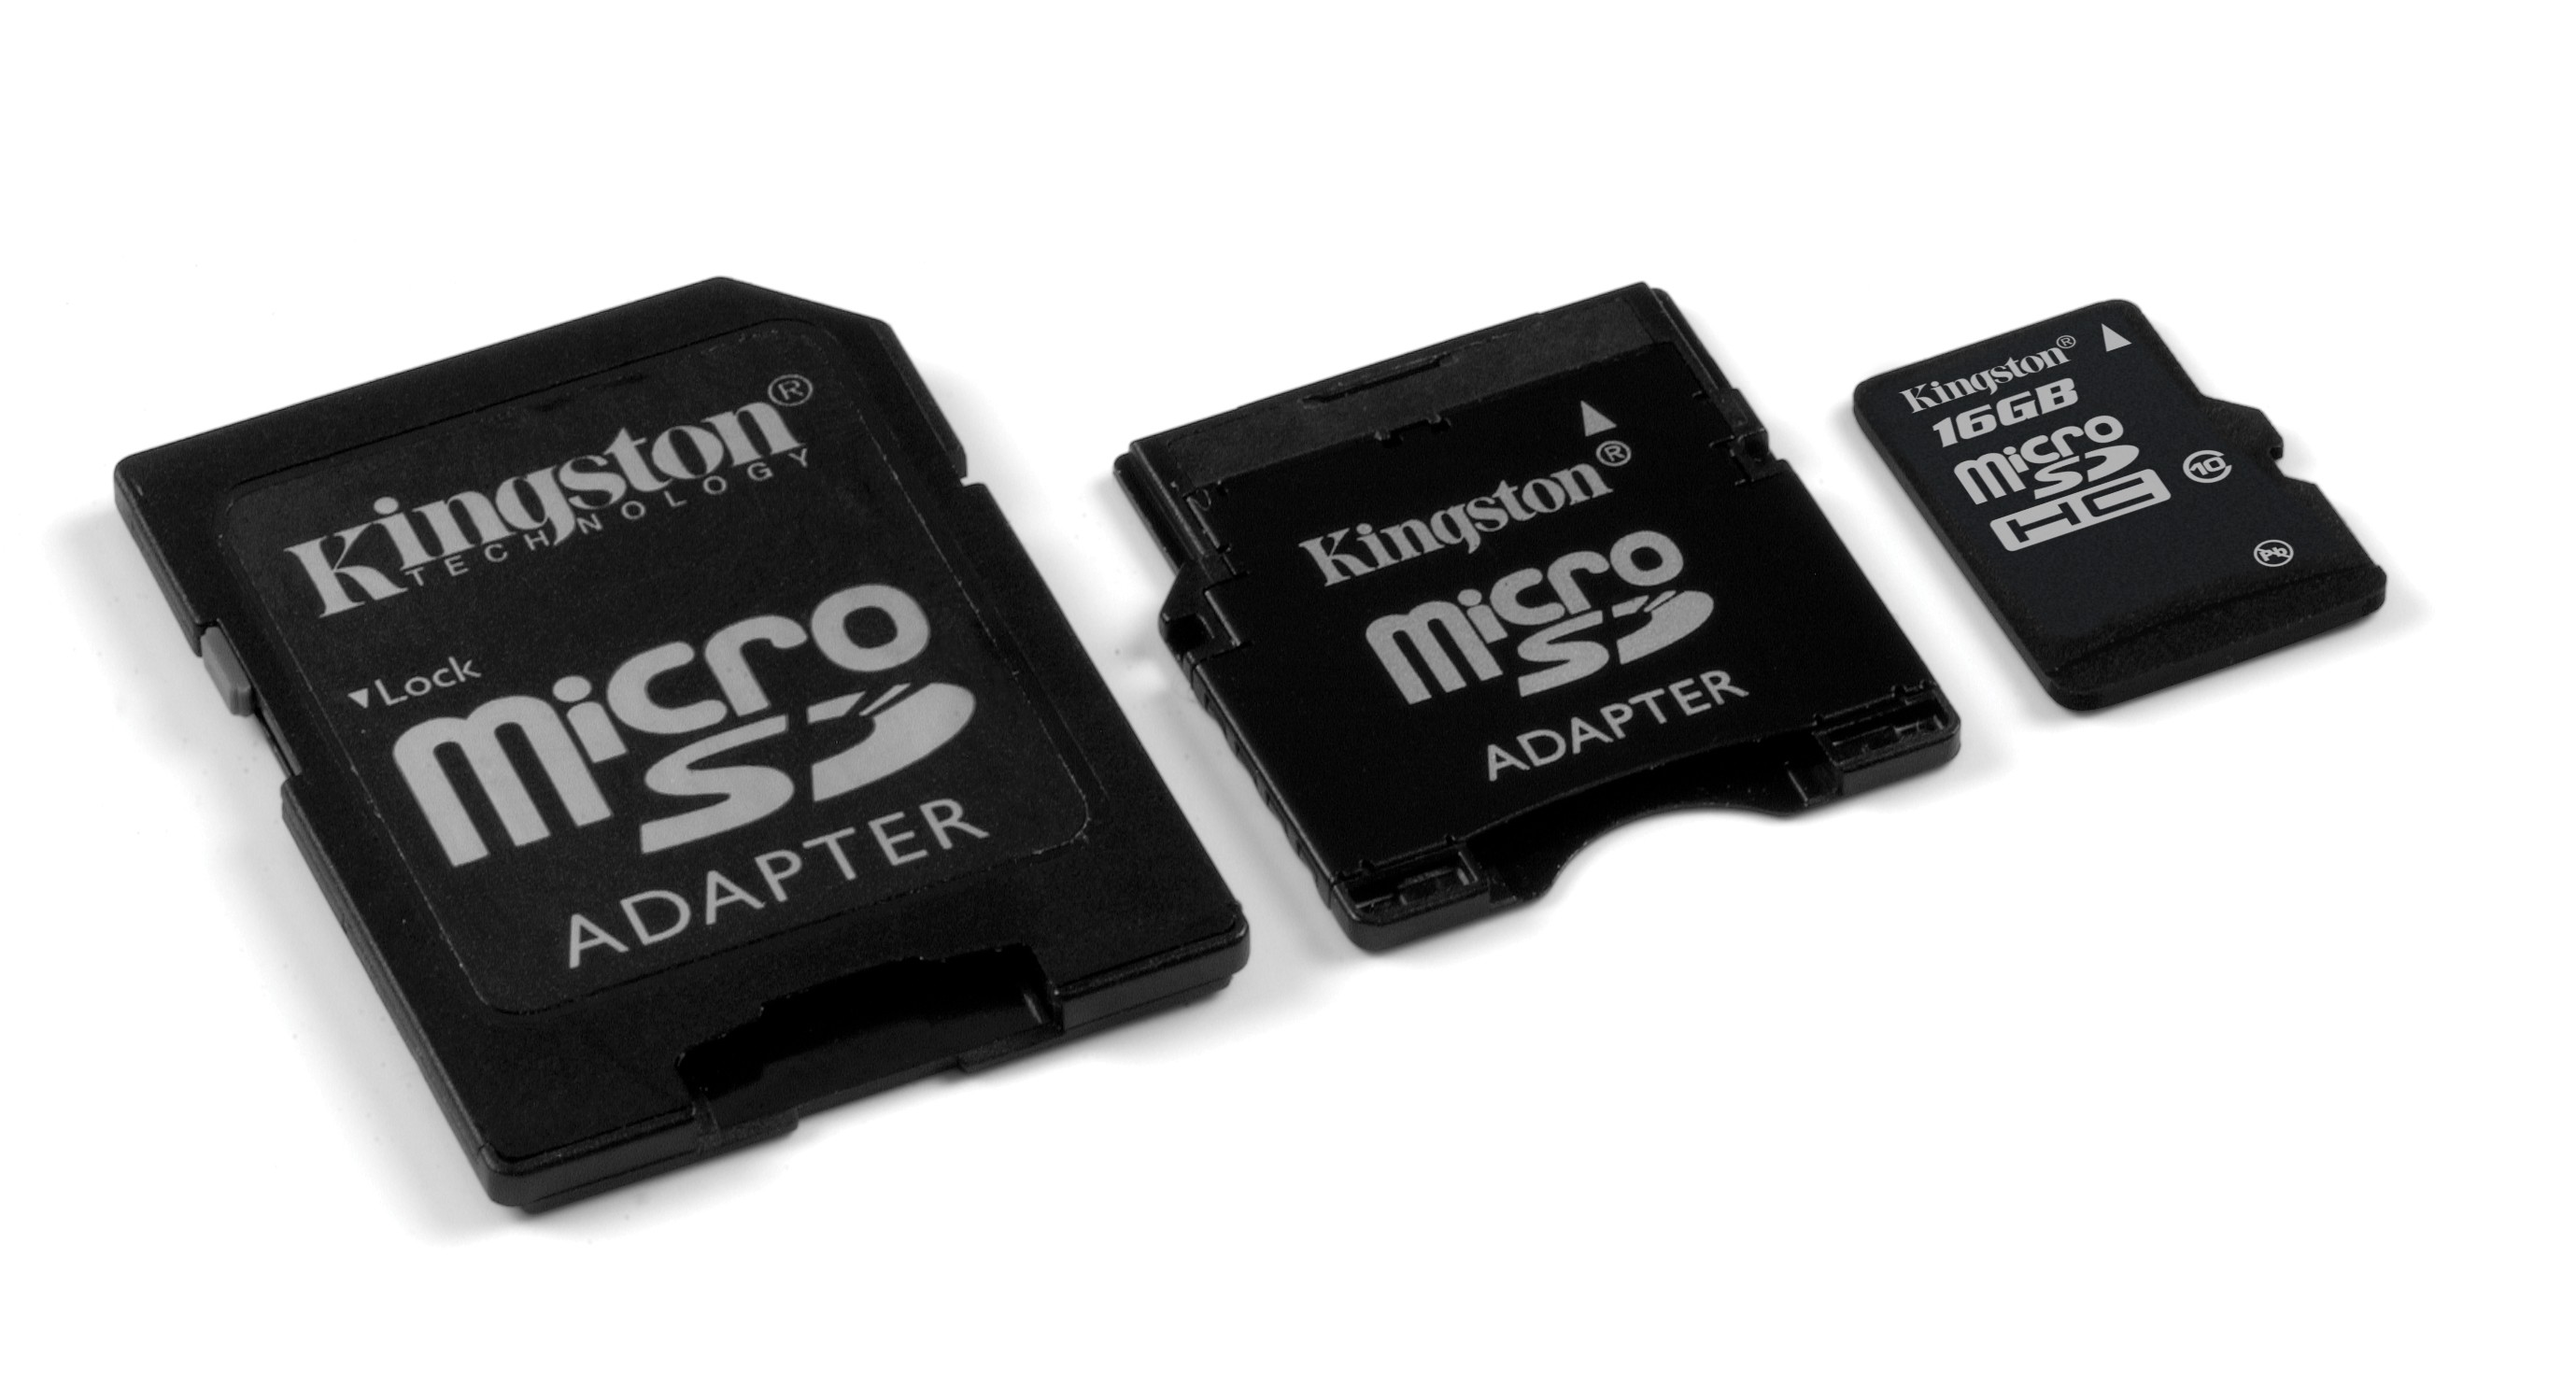 Комплект карт памяти. Карта памяти MICROSD 2gb. MICROSD карта памяти 1gb. Микро СД Кингстон. Карта памяти Kingston 2 ГБ.